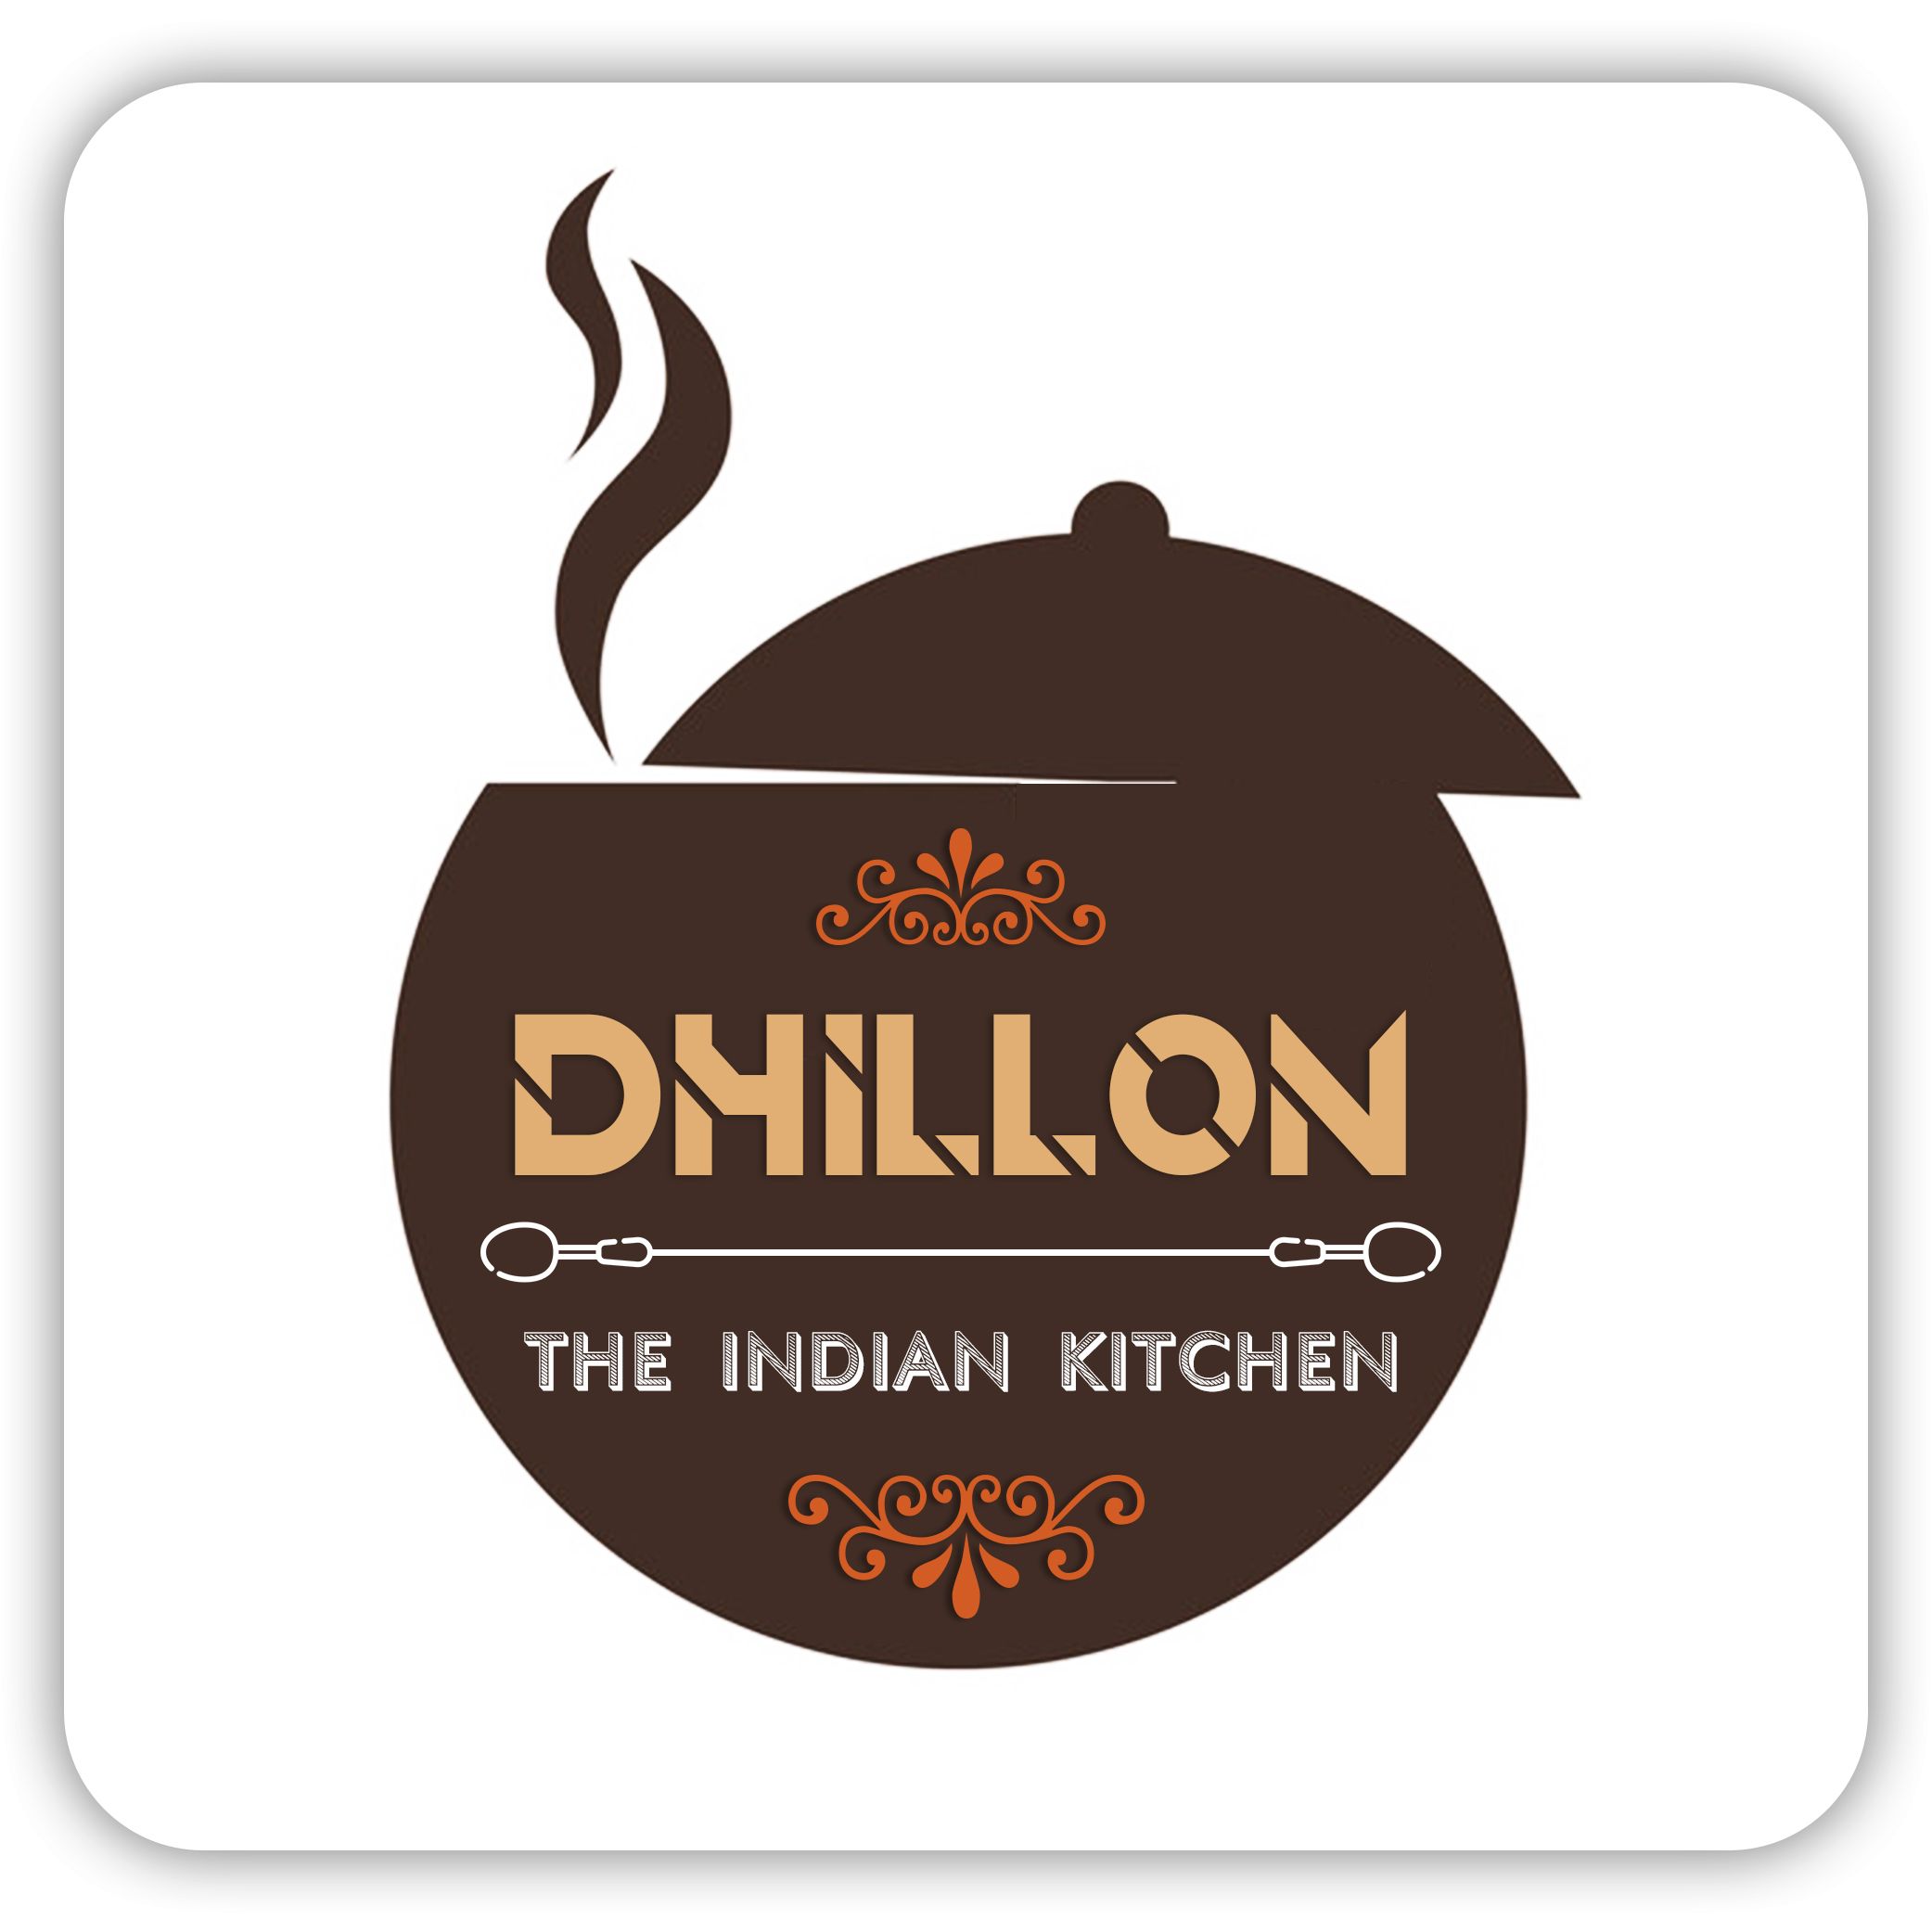 Dhillon the Indian kitchen